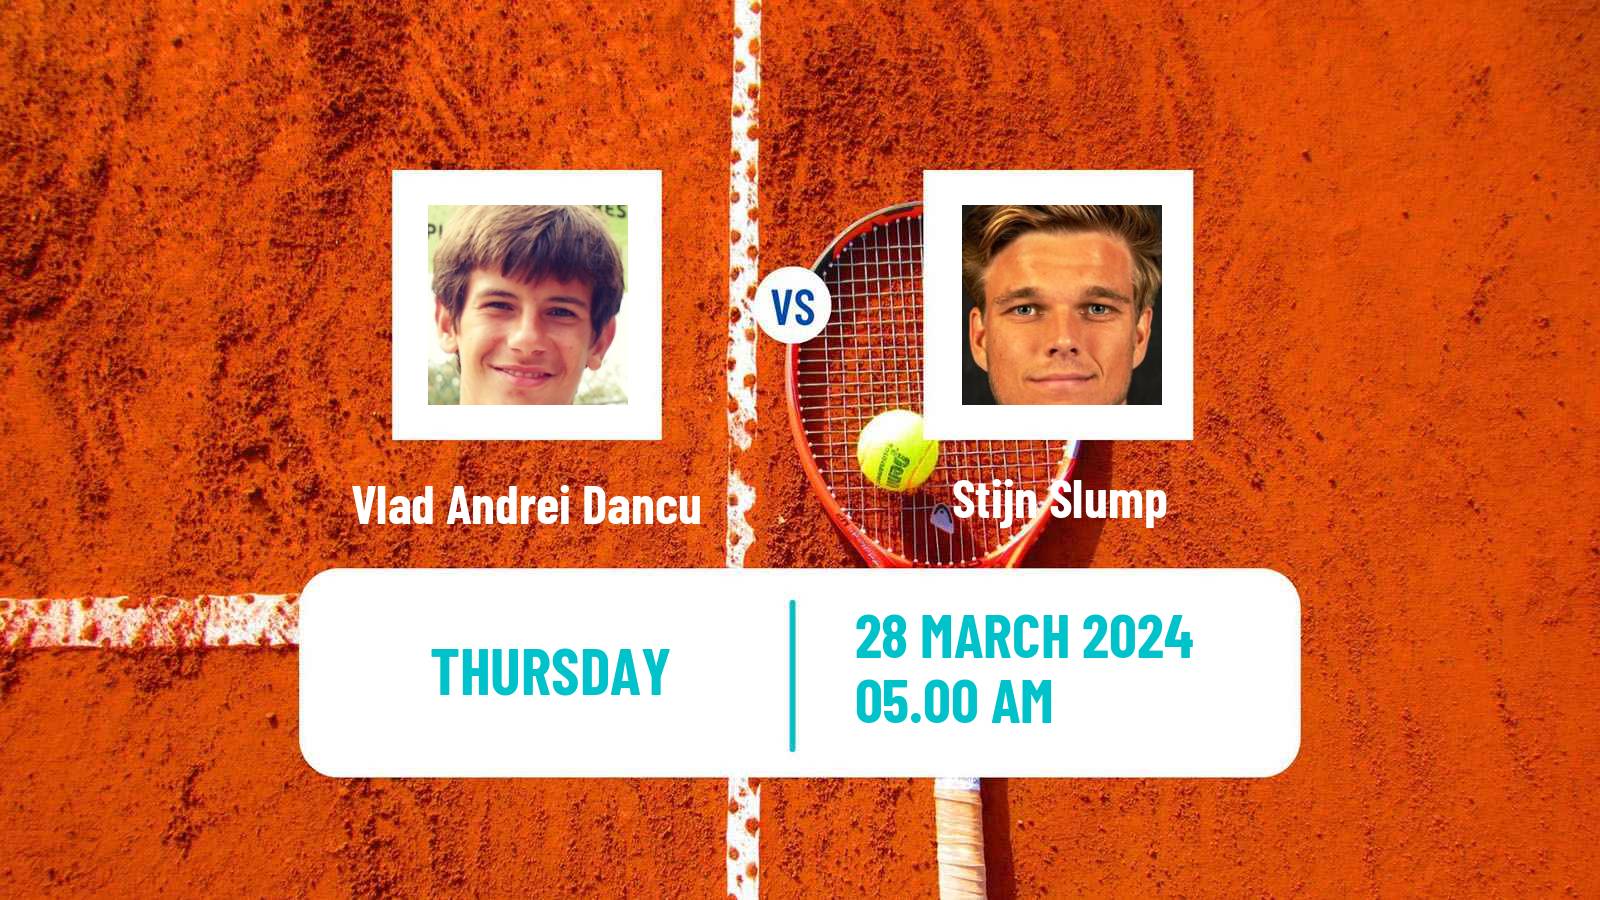 Tennis ITF M15 Antalya 8 Men Vlad Andrei Dancu - Stijn Slump